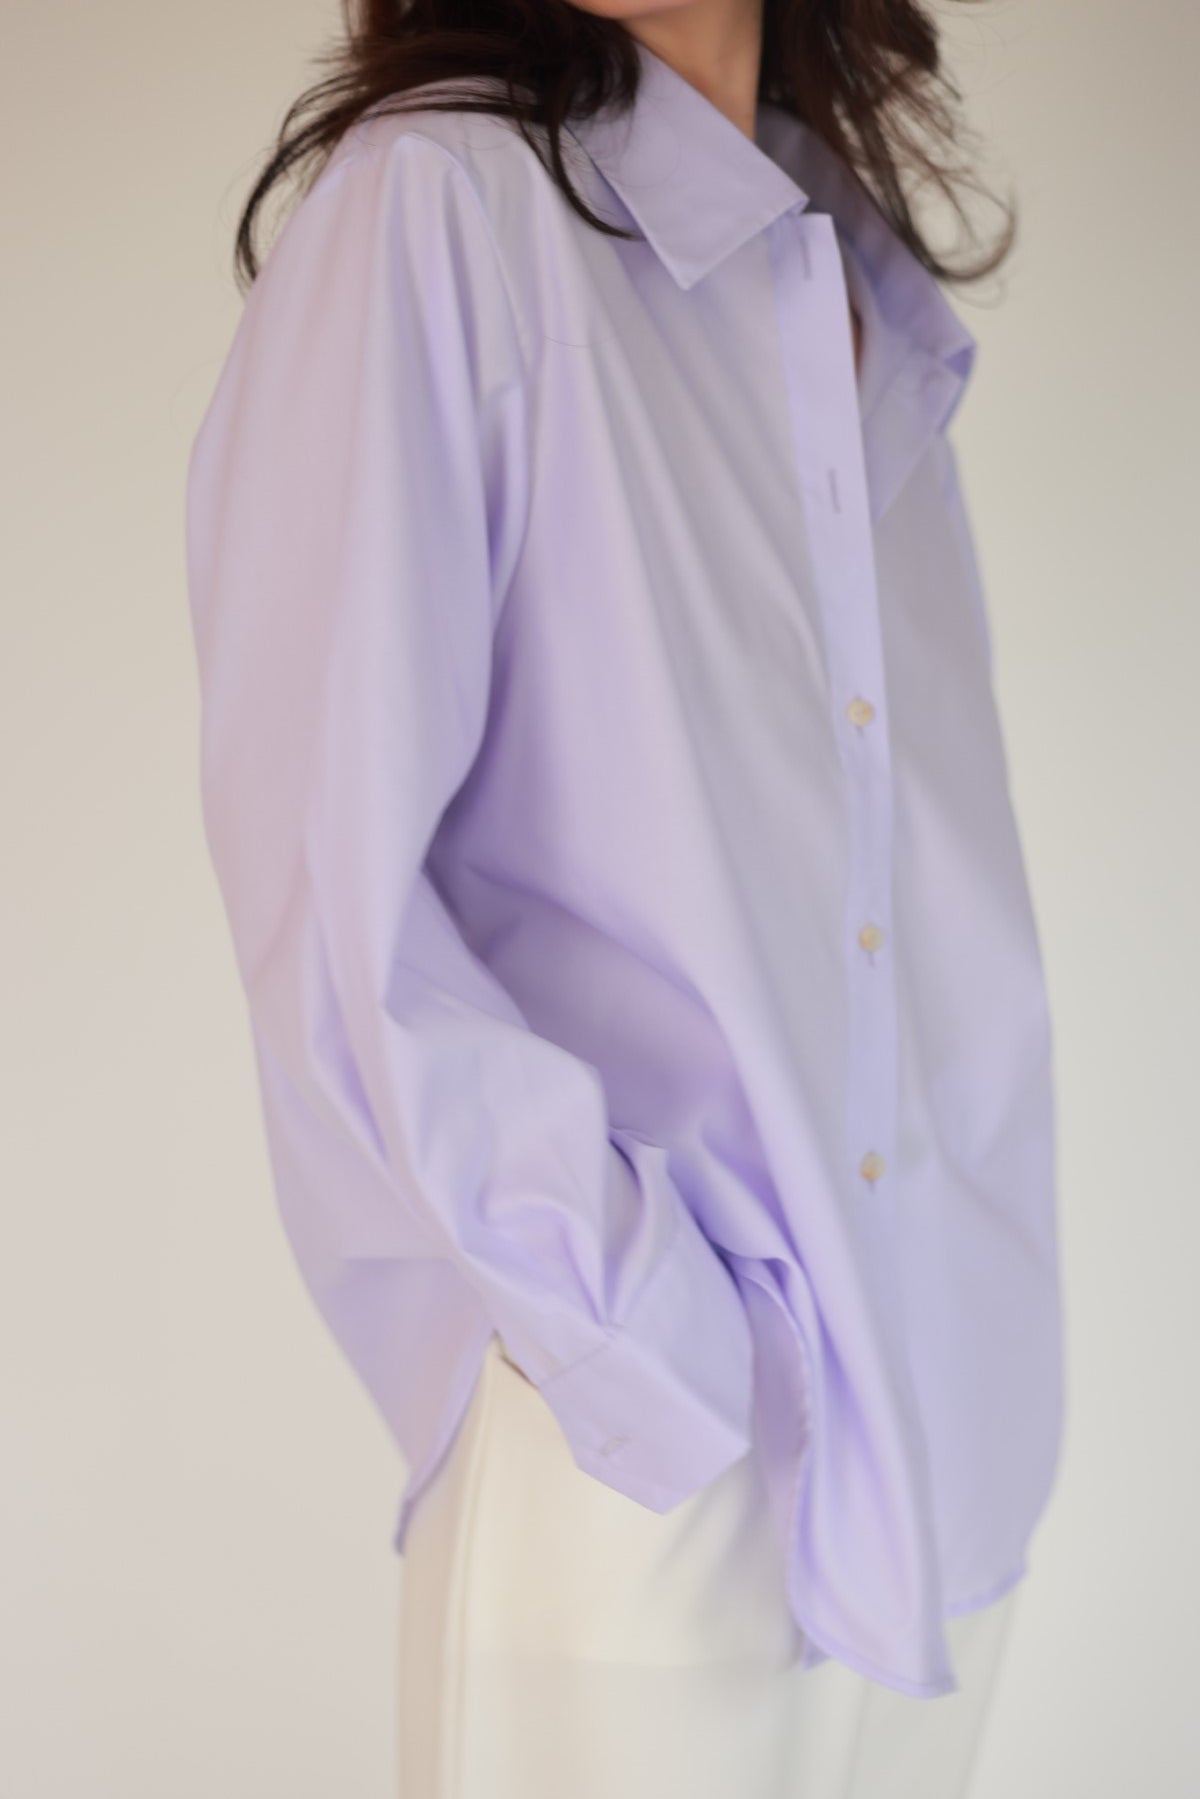 Boyfriend shirt white/blue/light purple